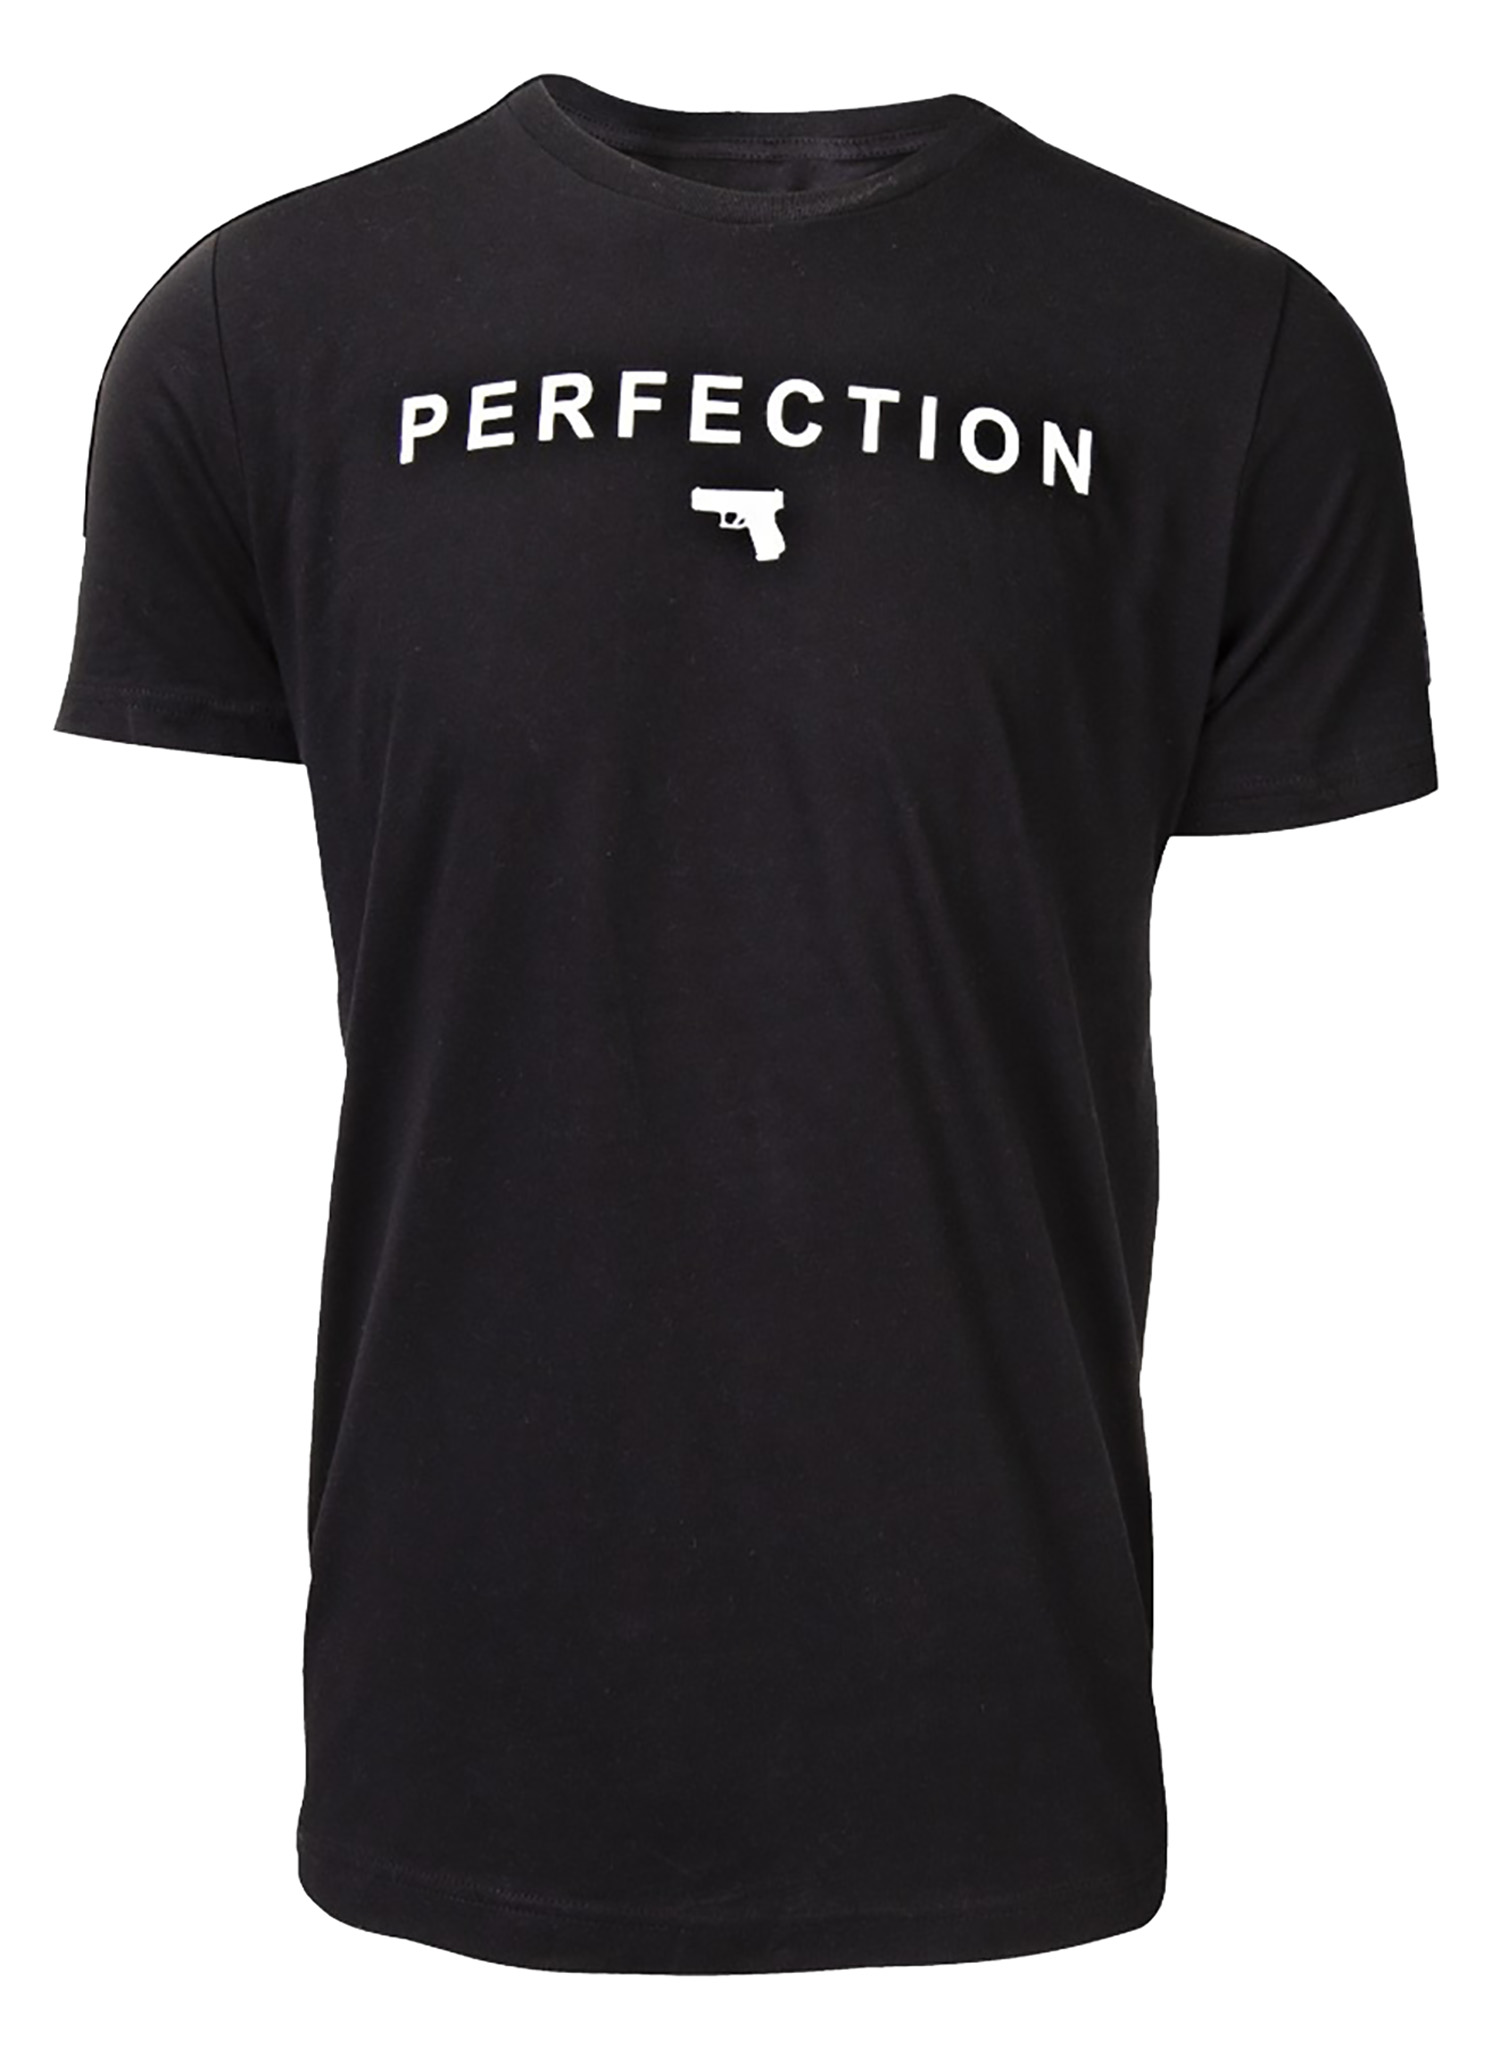 Glock AA75128 Perfection Pistol T-Shirt Black 2XL Short Sleeve